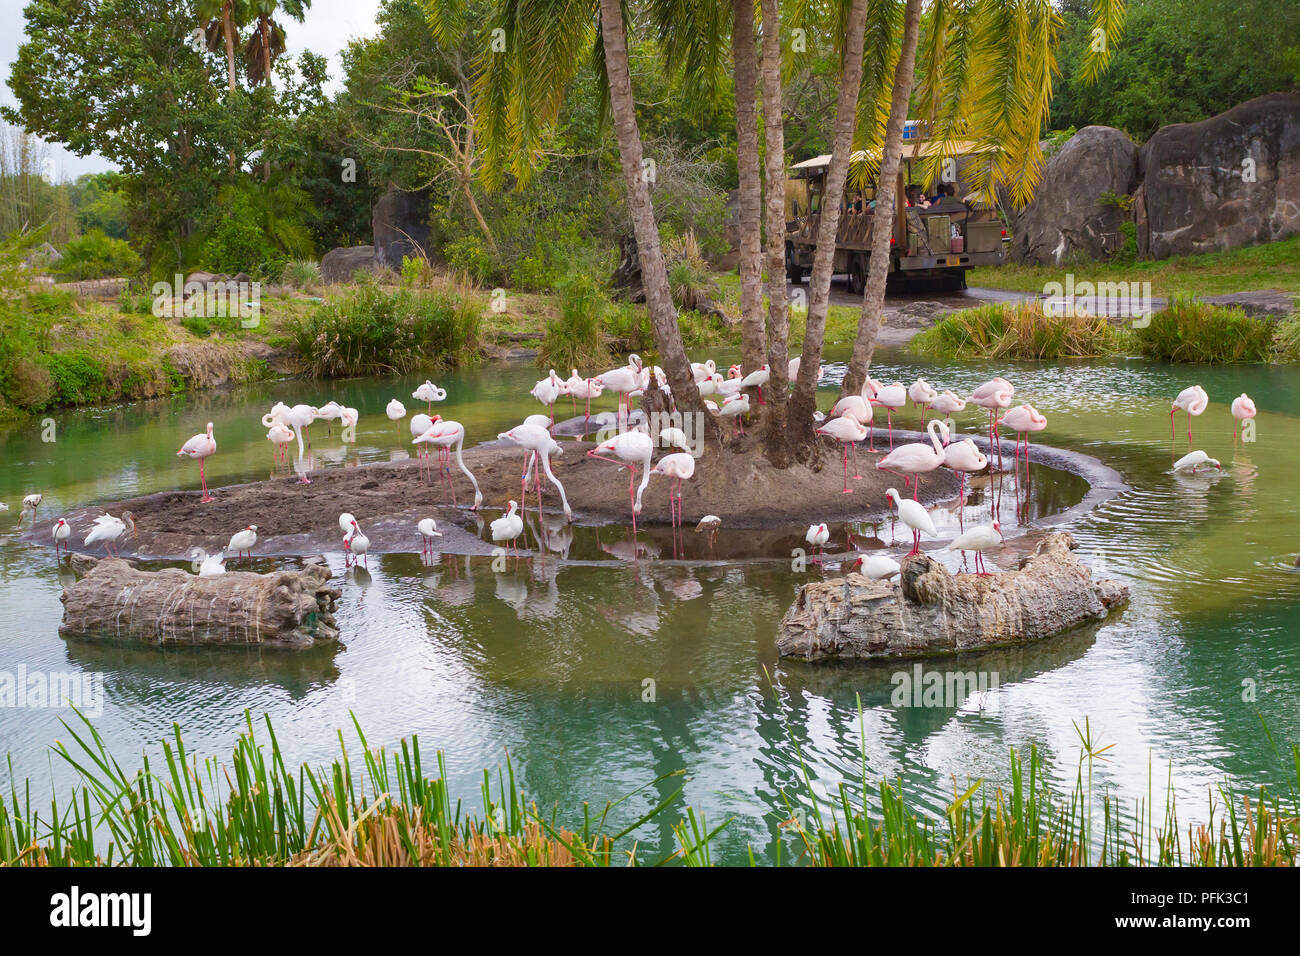 Kilimanjaro Safari ride in Disneys Animal Kingdom Theme Park, Walt Disney World, Orlando, Florida. Stock Photo